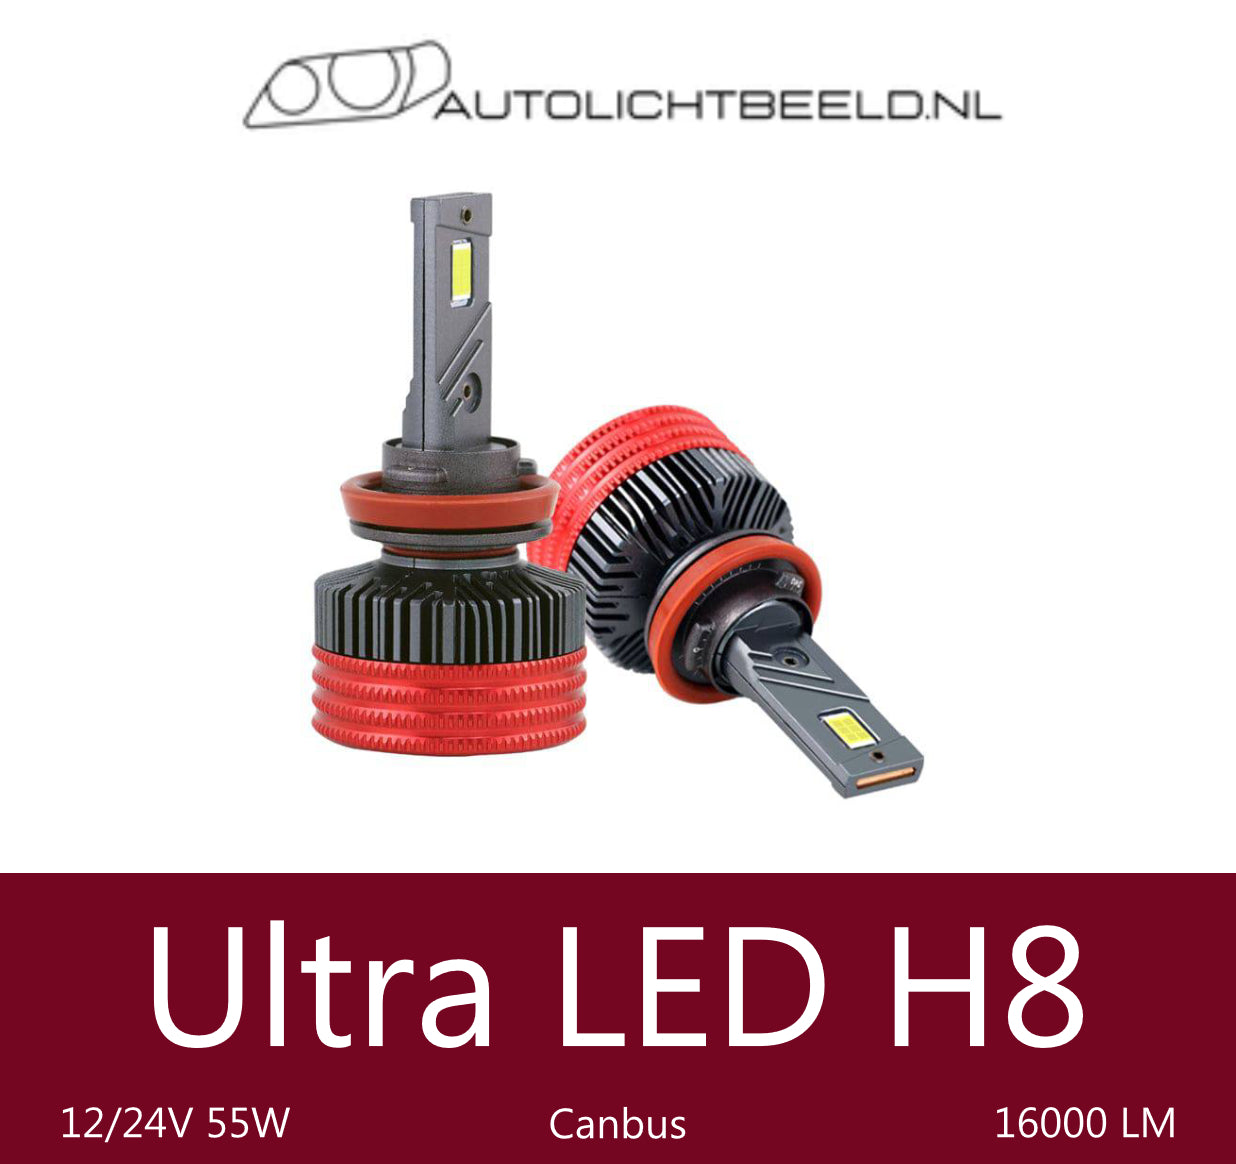 H8 Ultra LED - Autolichtbeeld